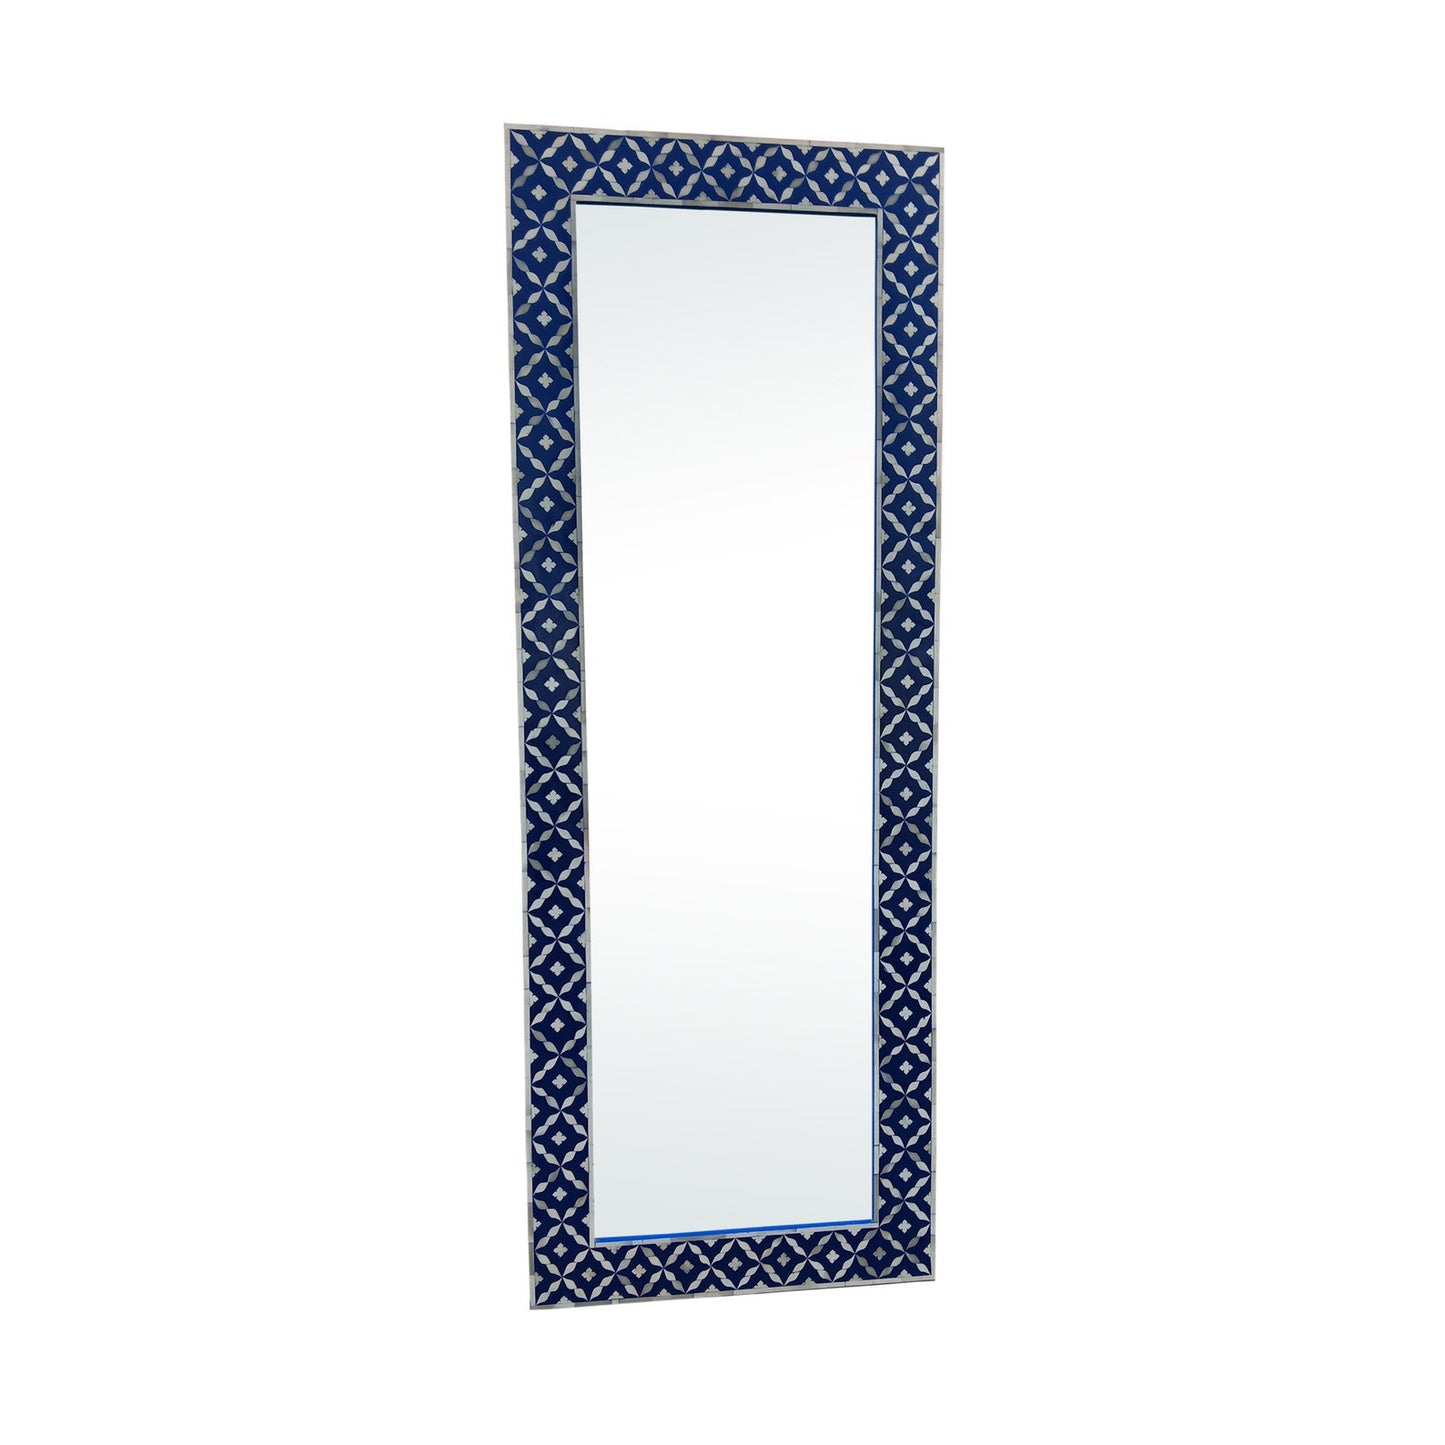 Bone Inlay Wall Mirror Frame with Eye Design bedroom decor mirror